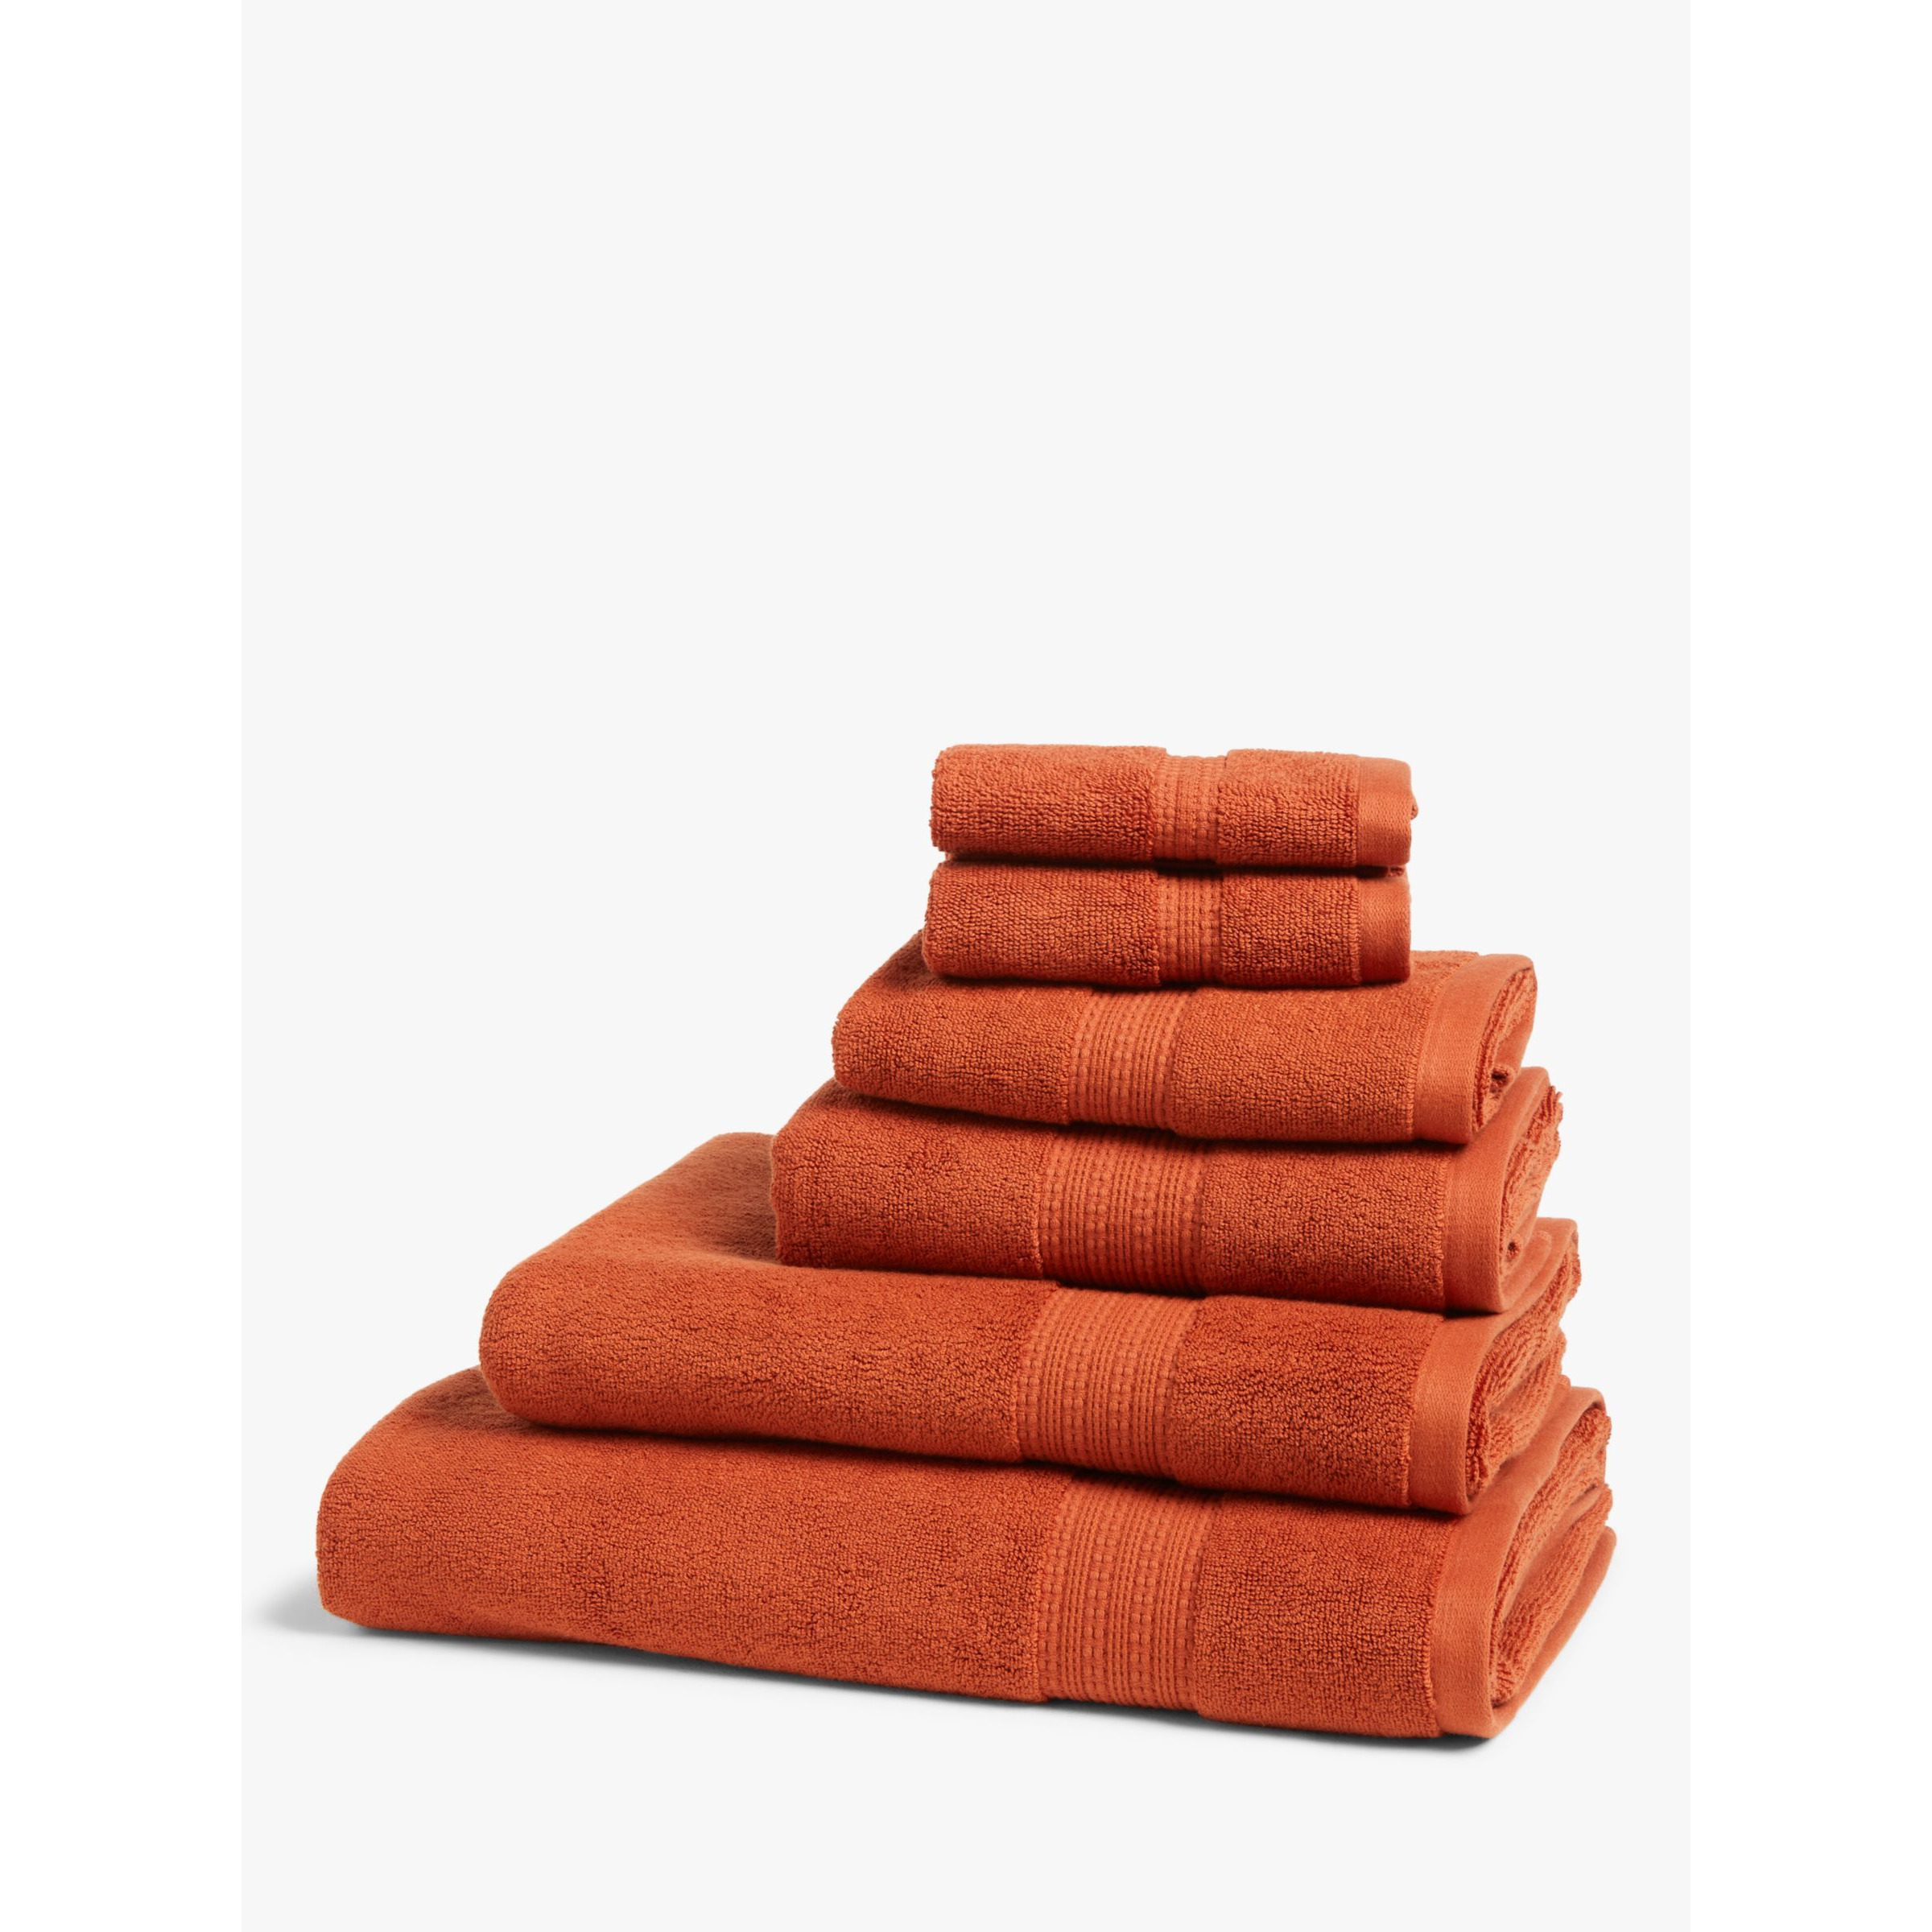 John Lewis Supreme Supima® Cotton Towels - image 1